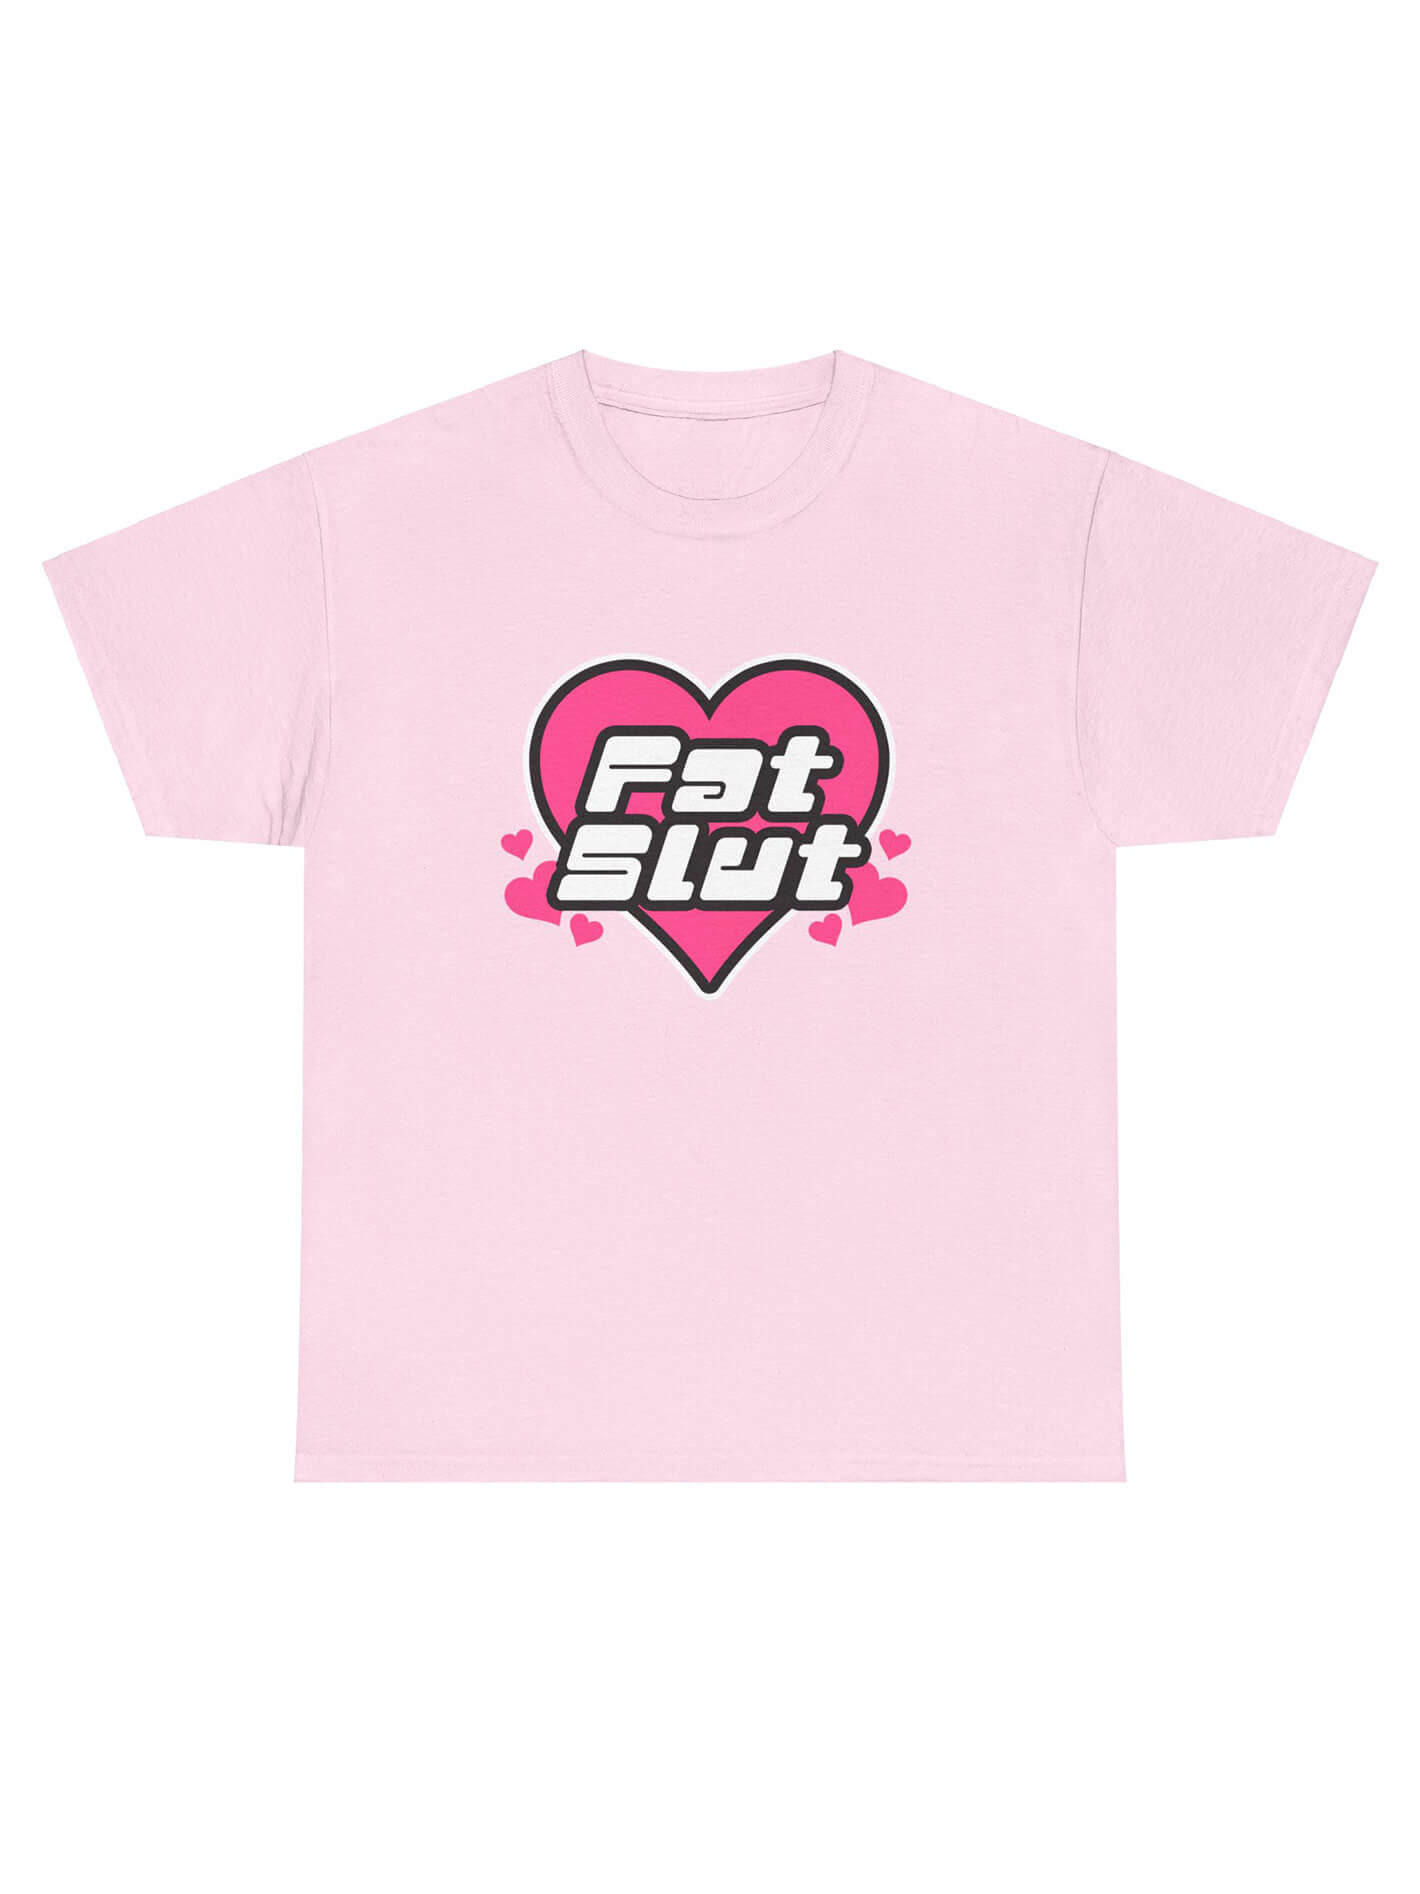 Pink kawaii body positive t-shirt.